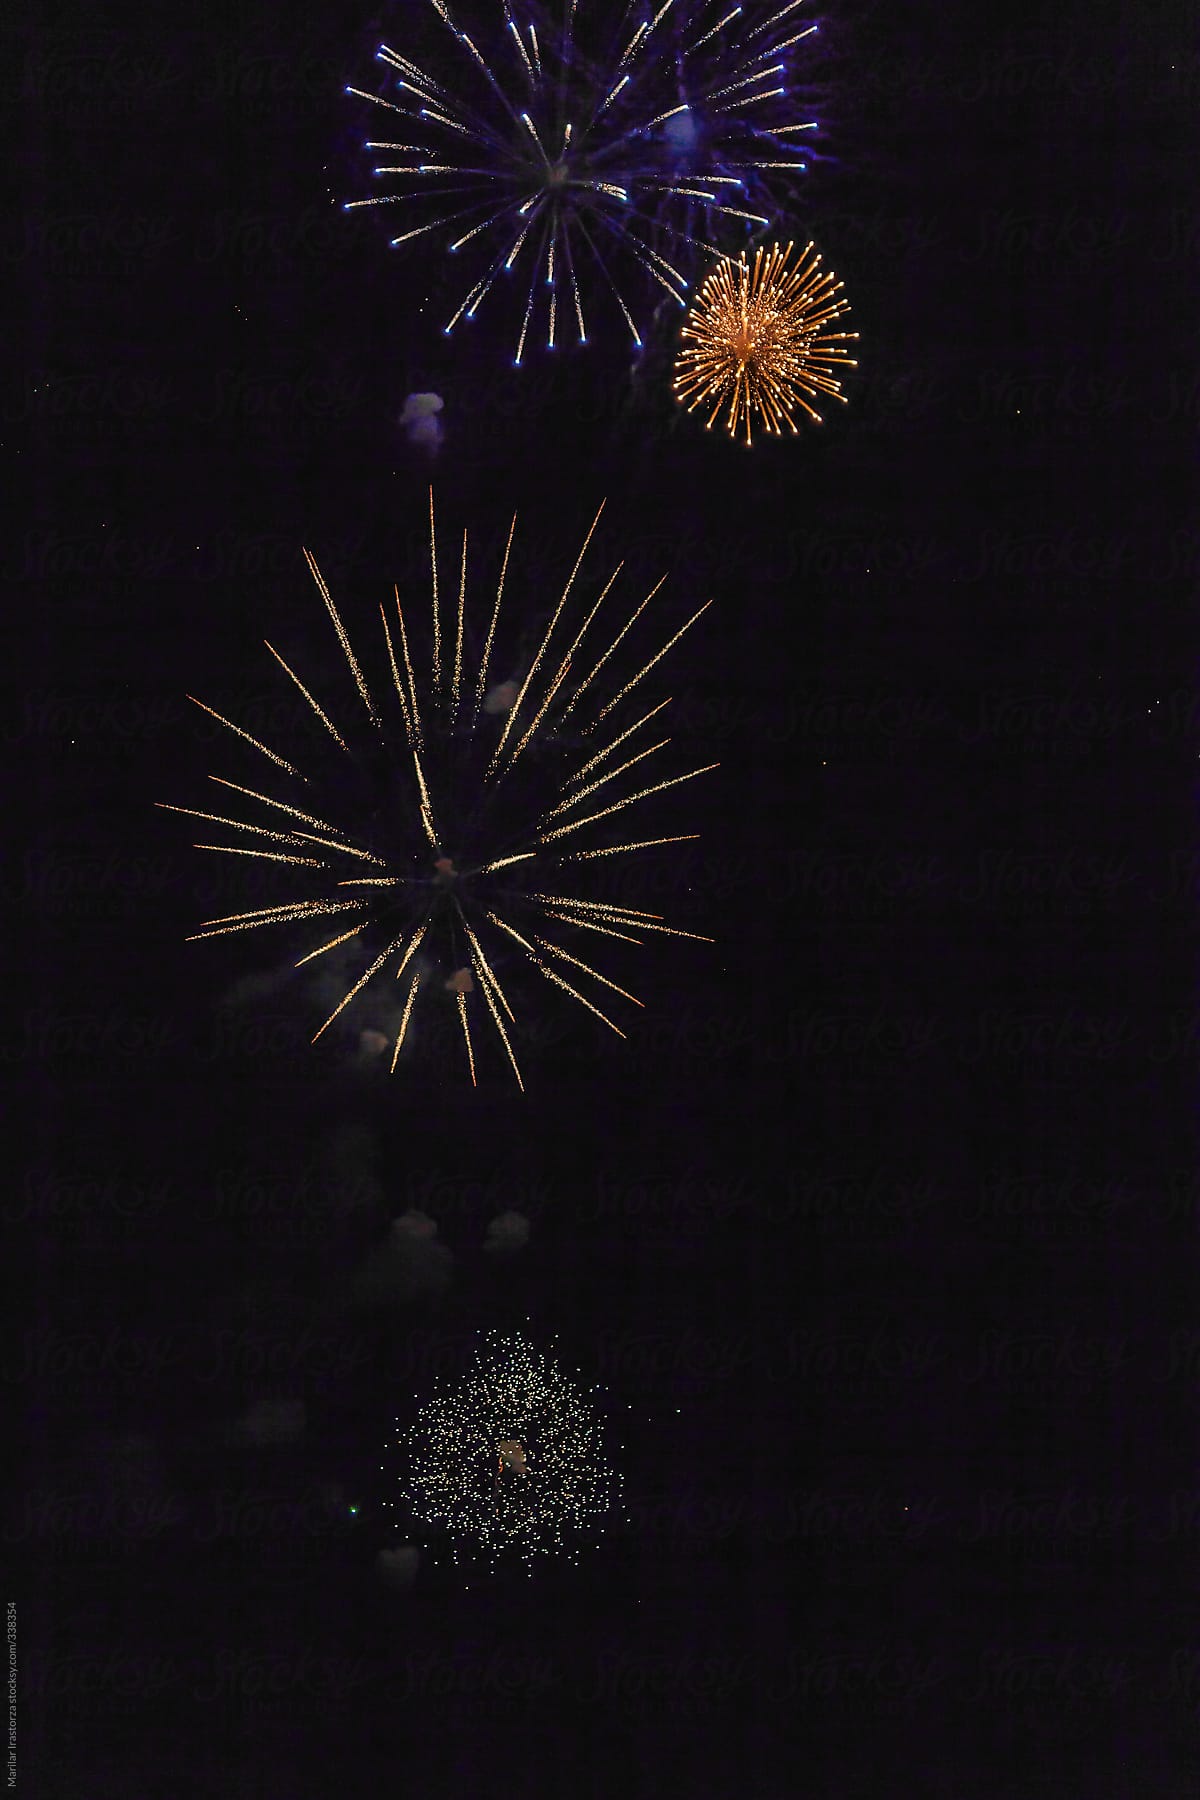 Fireworks in a popular celebration